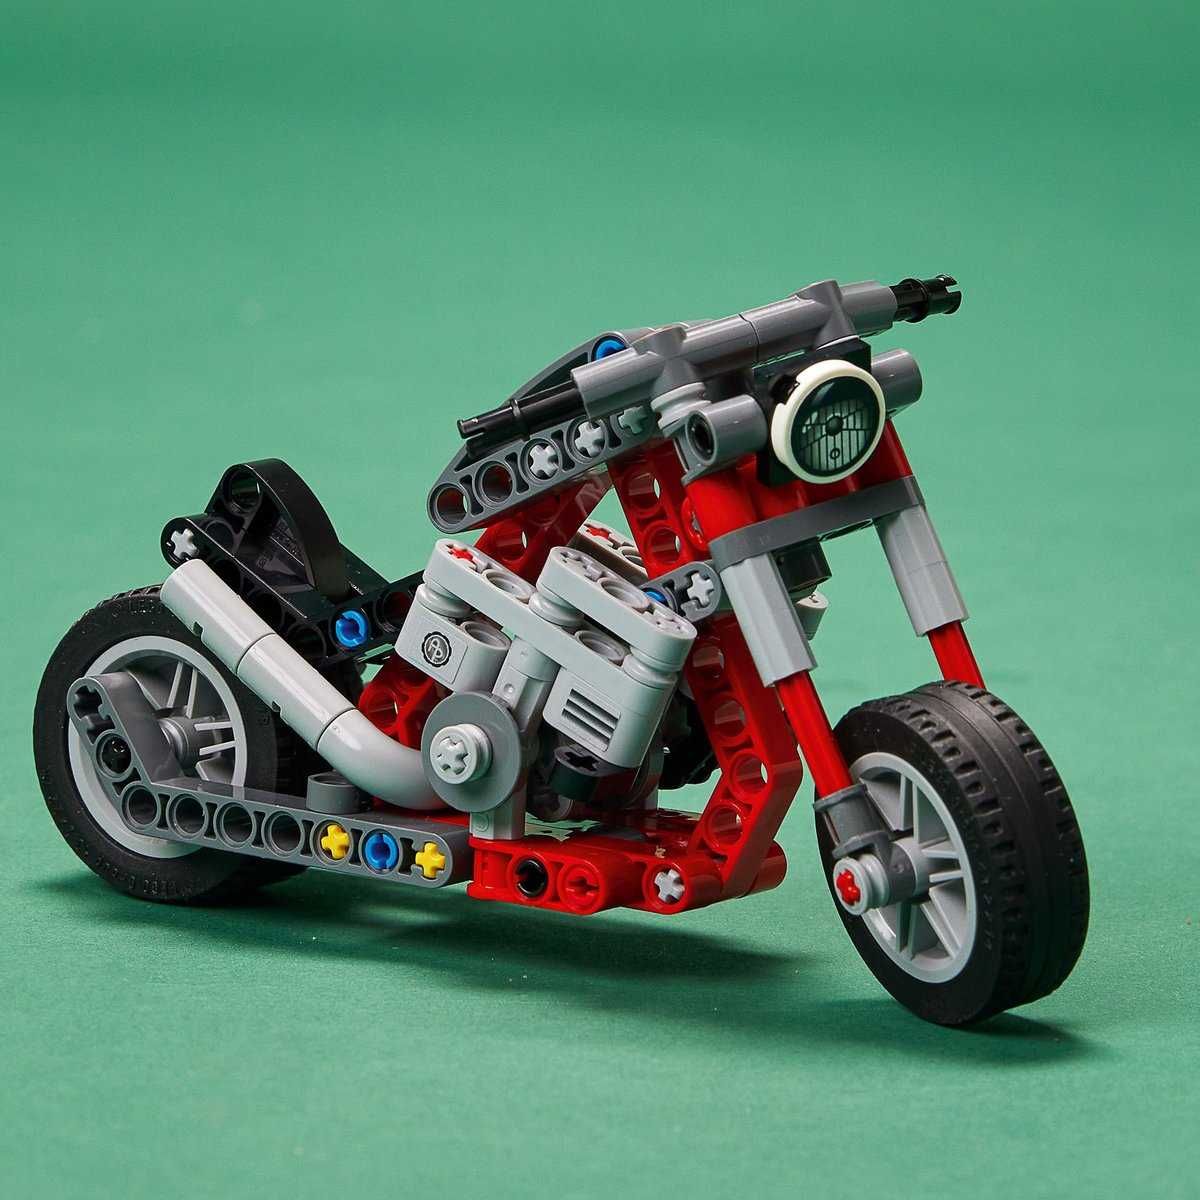 LEGO TECHNIC 42132 motocykl klocki